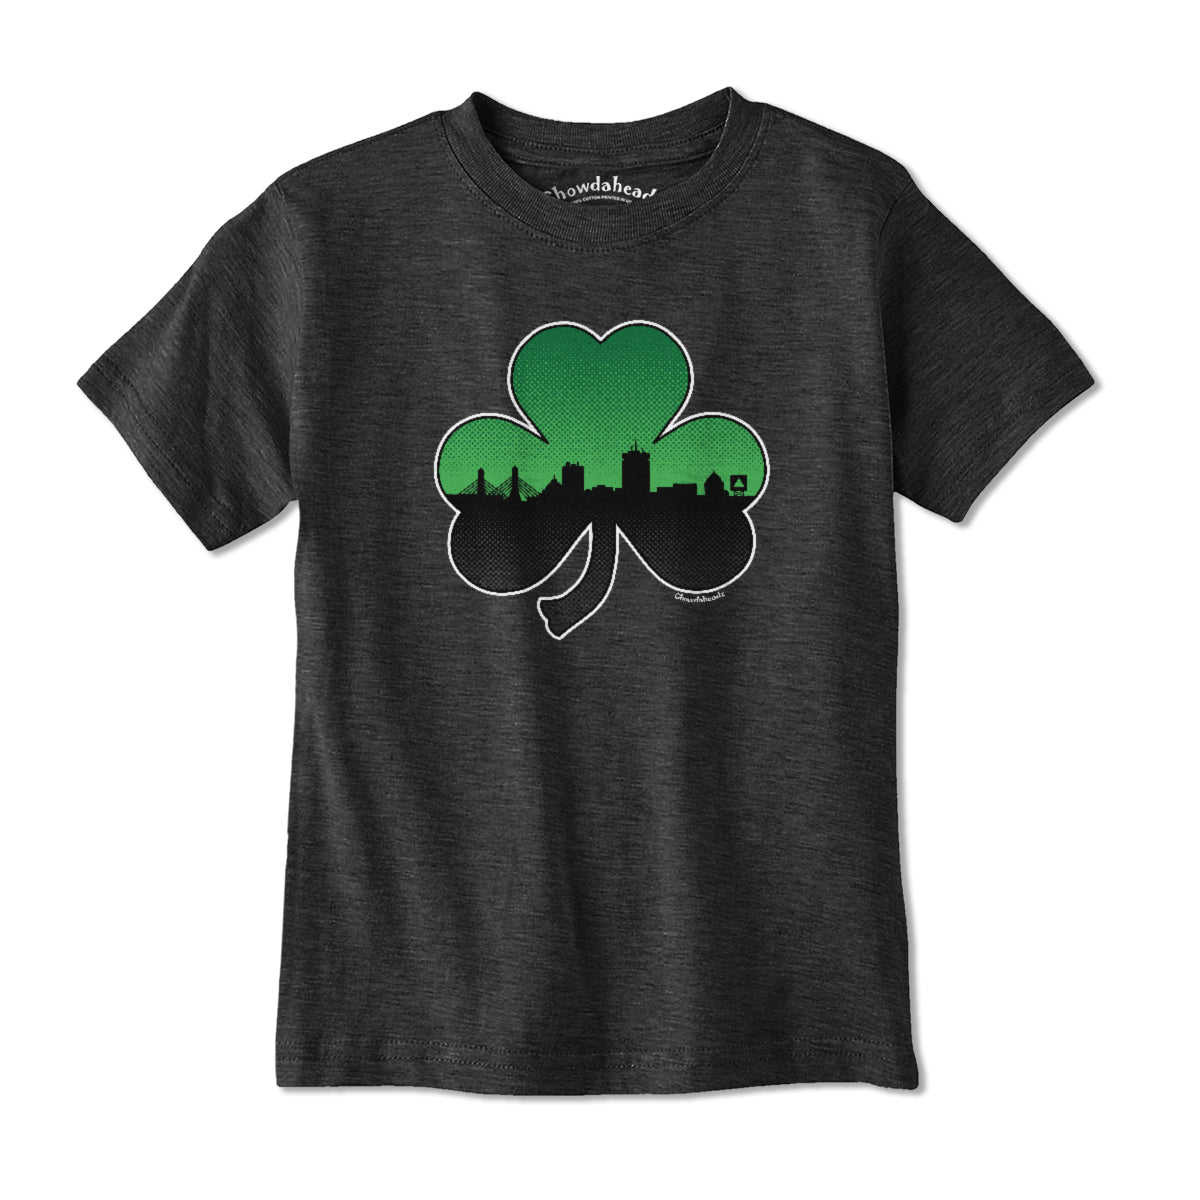 Boston Shamrock Skyline Youth T-Shirt - Chowdaheadz